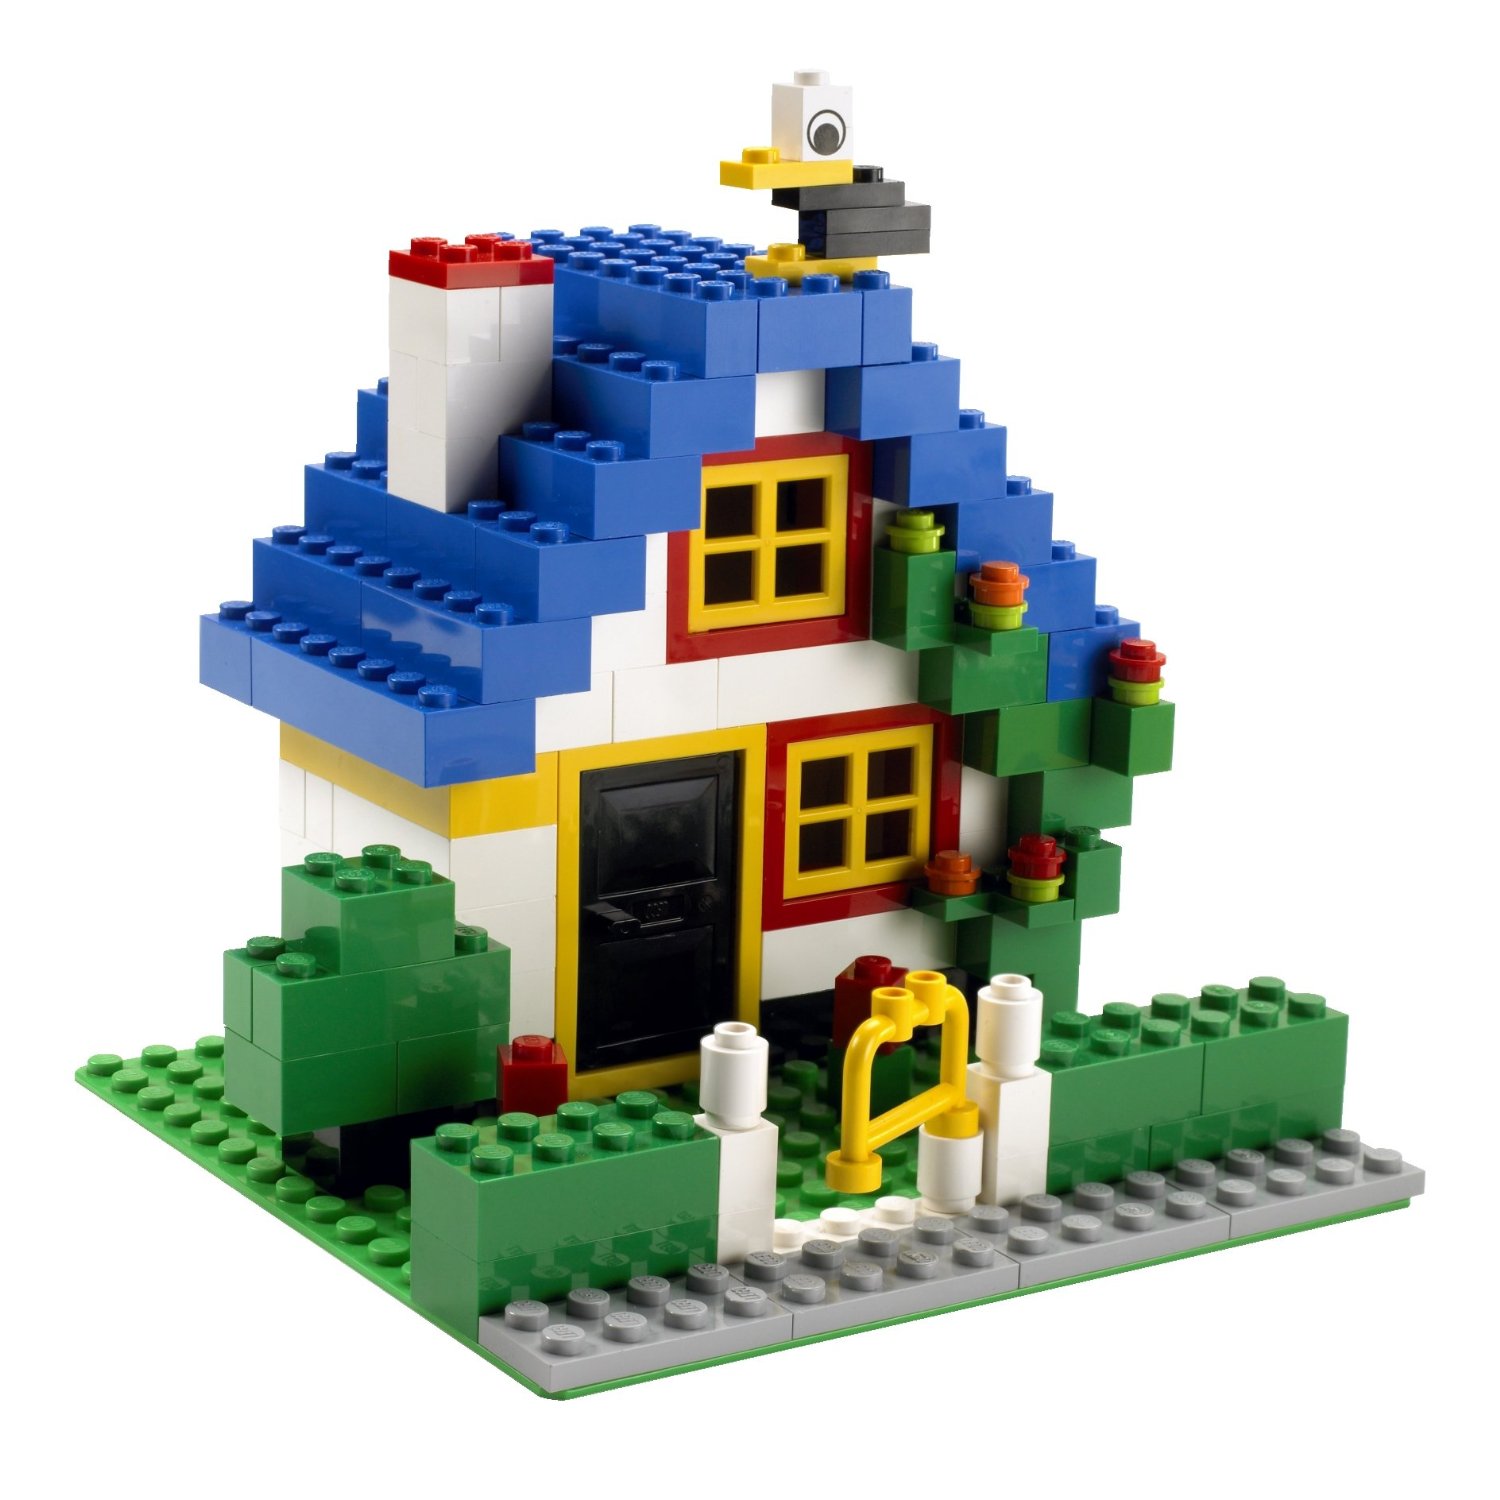 LEGO Ultimate Building Set - 405 Pieces (6166)